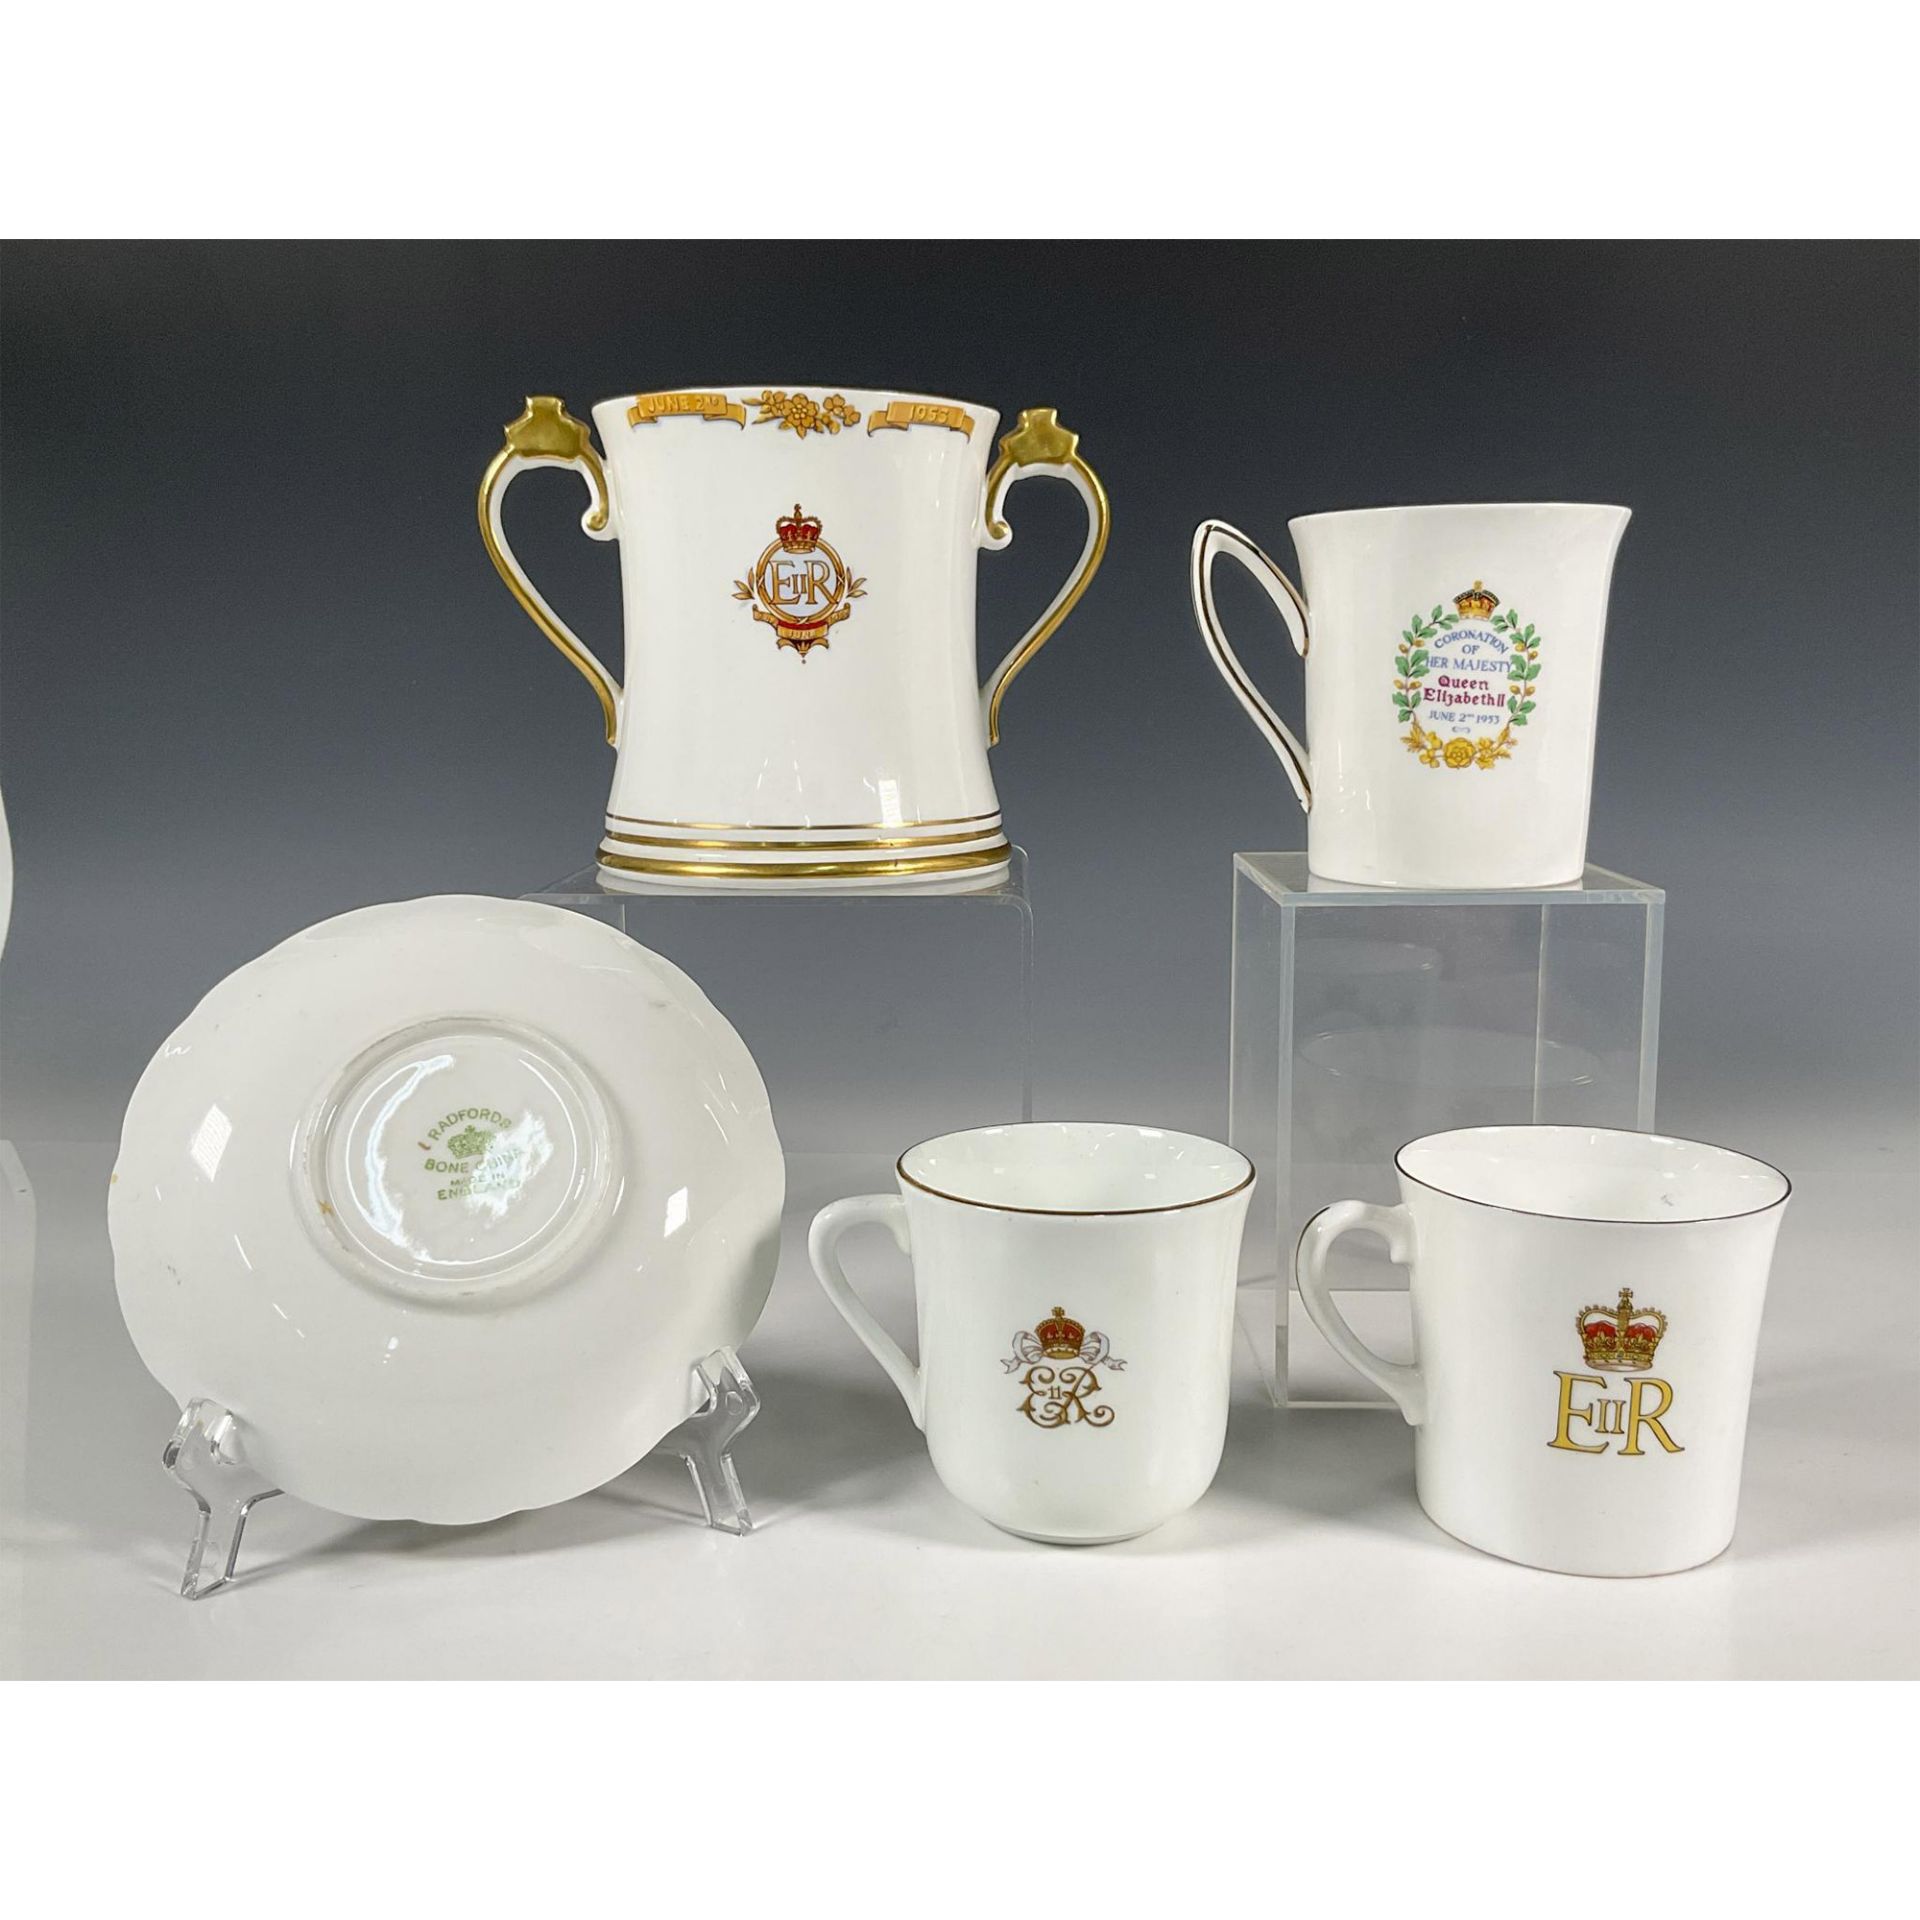 5pc Royal Commemorative Cups, Queen Elizabeth II - Image 2 of 3